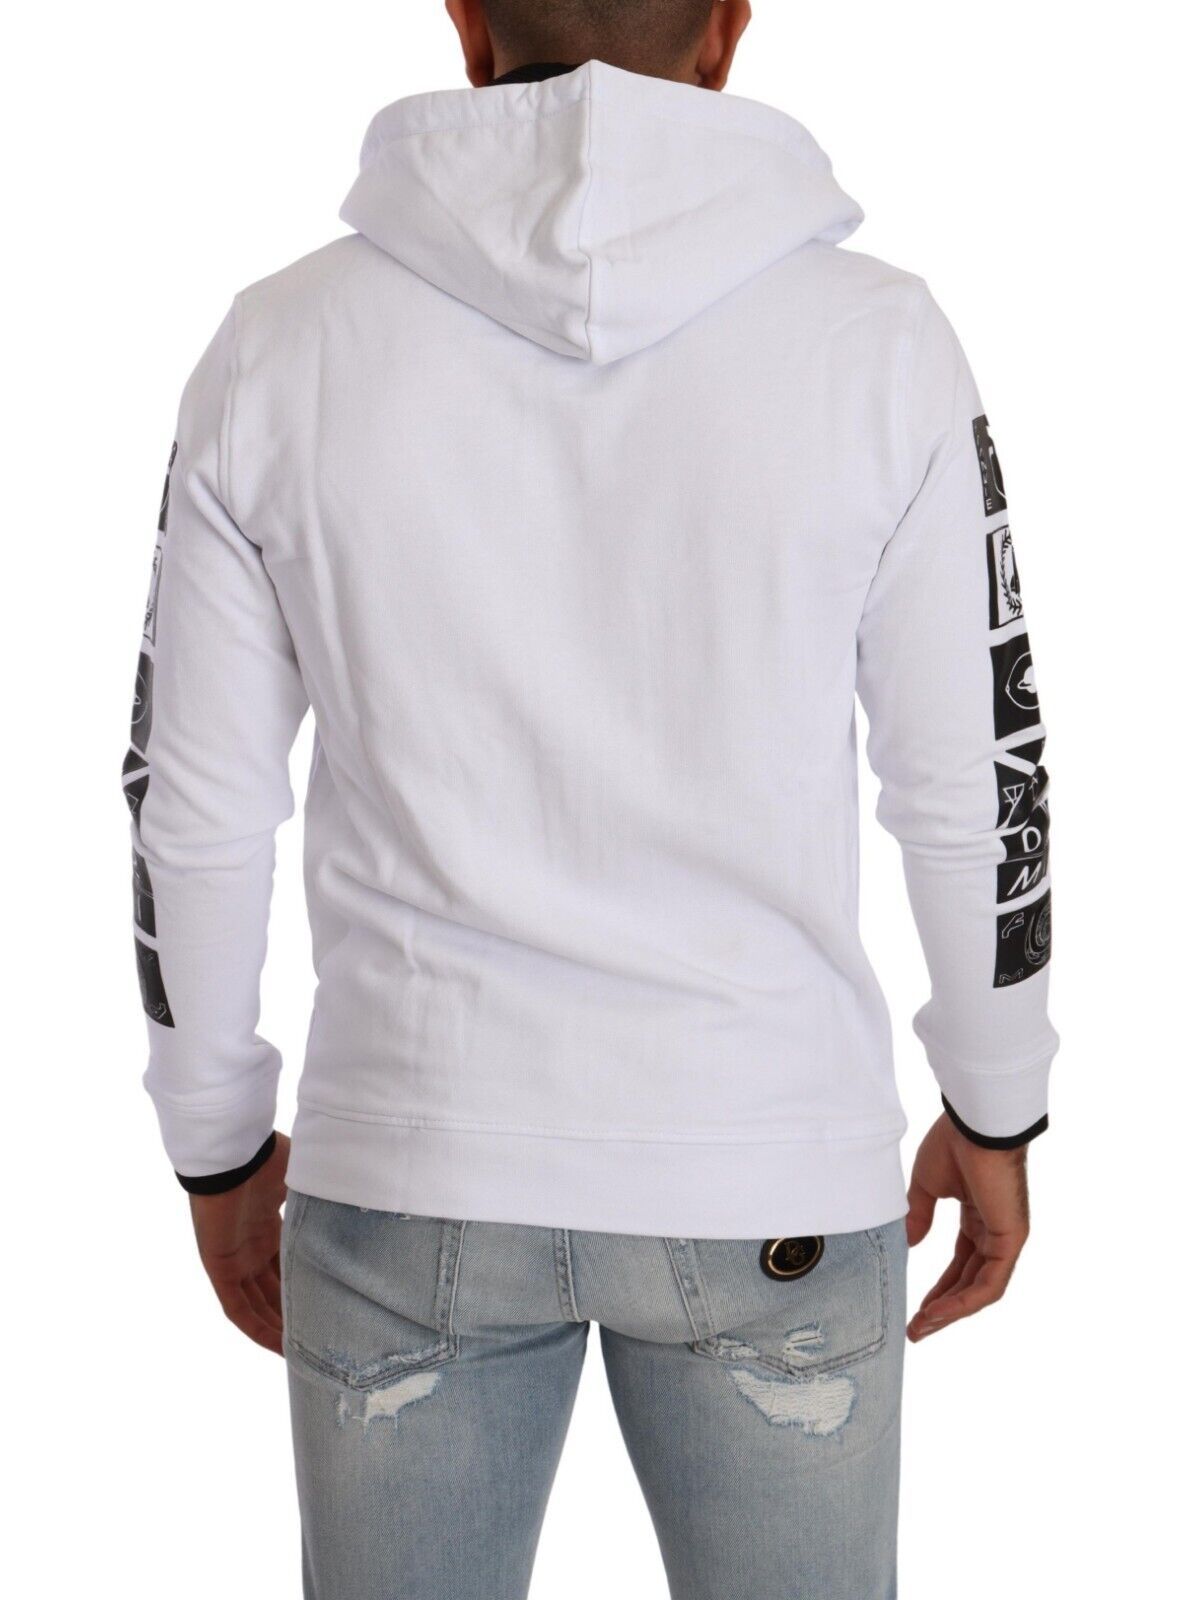 Chic White Hooded Zipper Sweatshirt Jacket